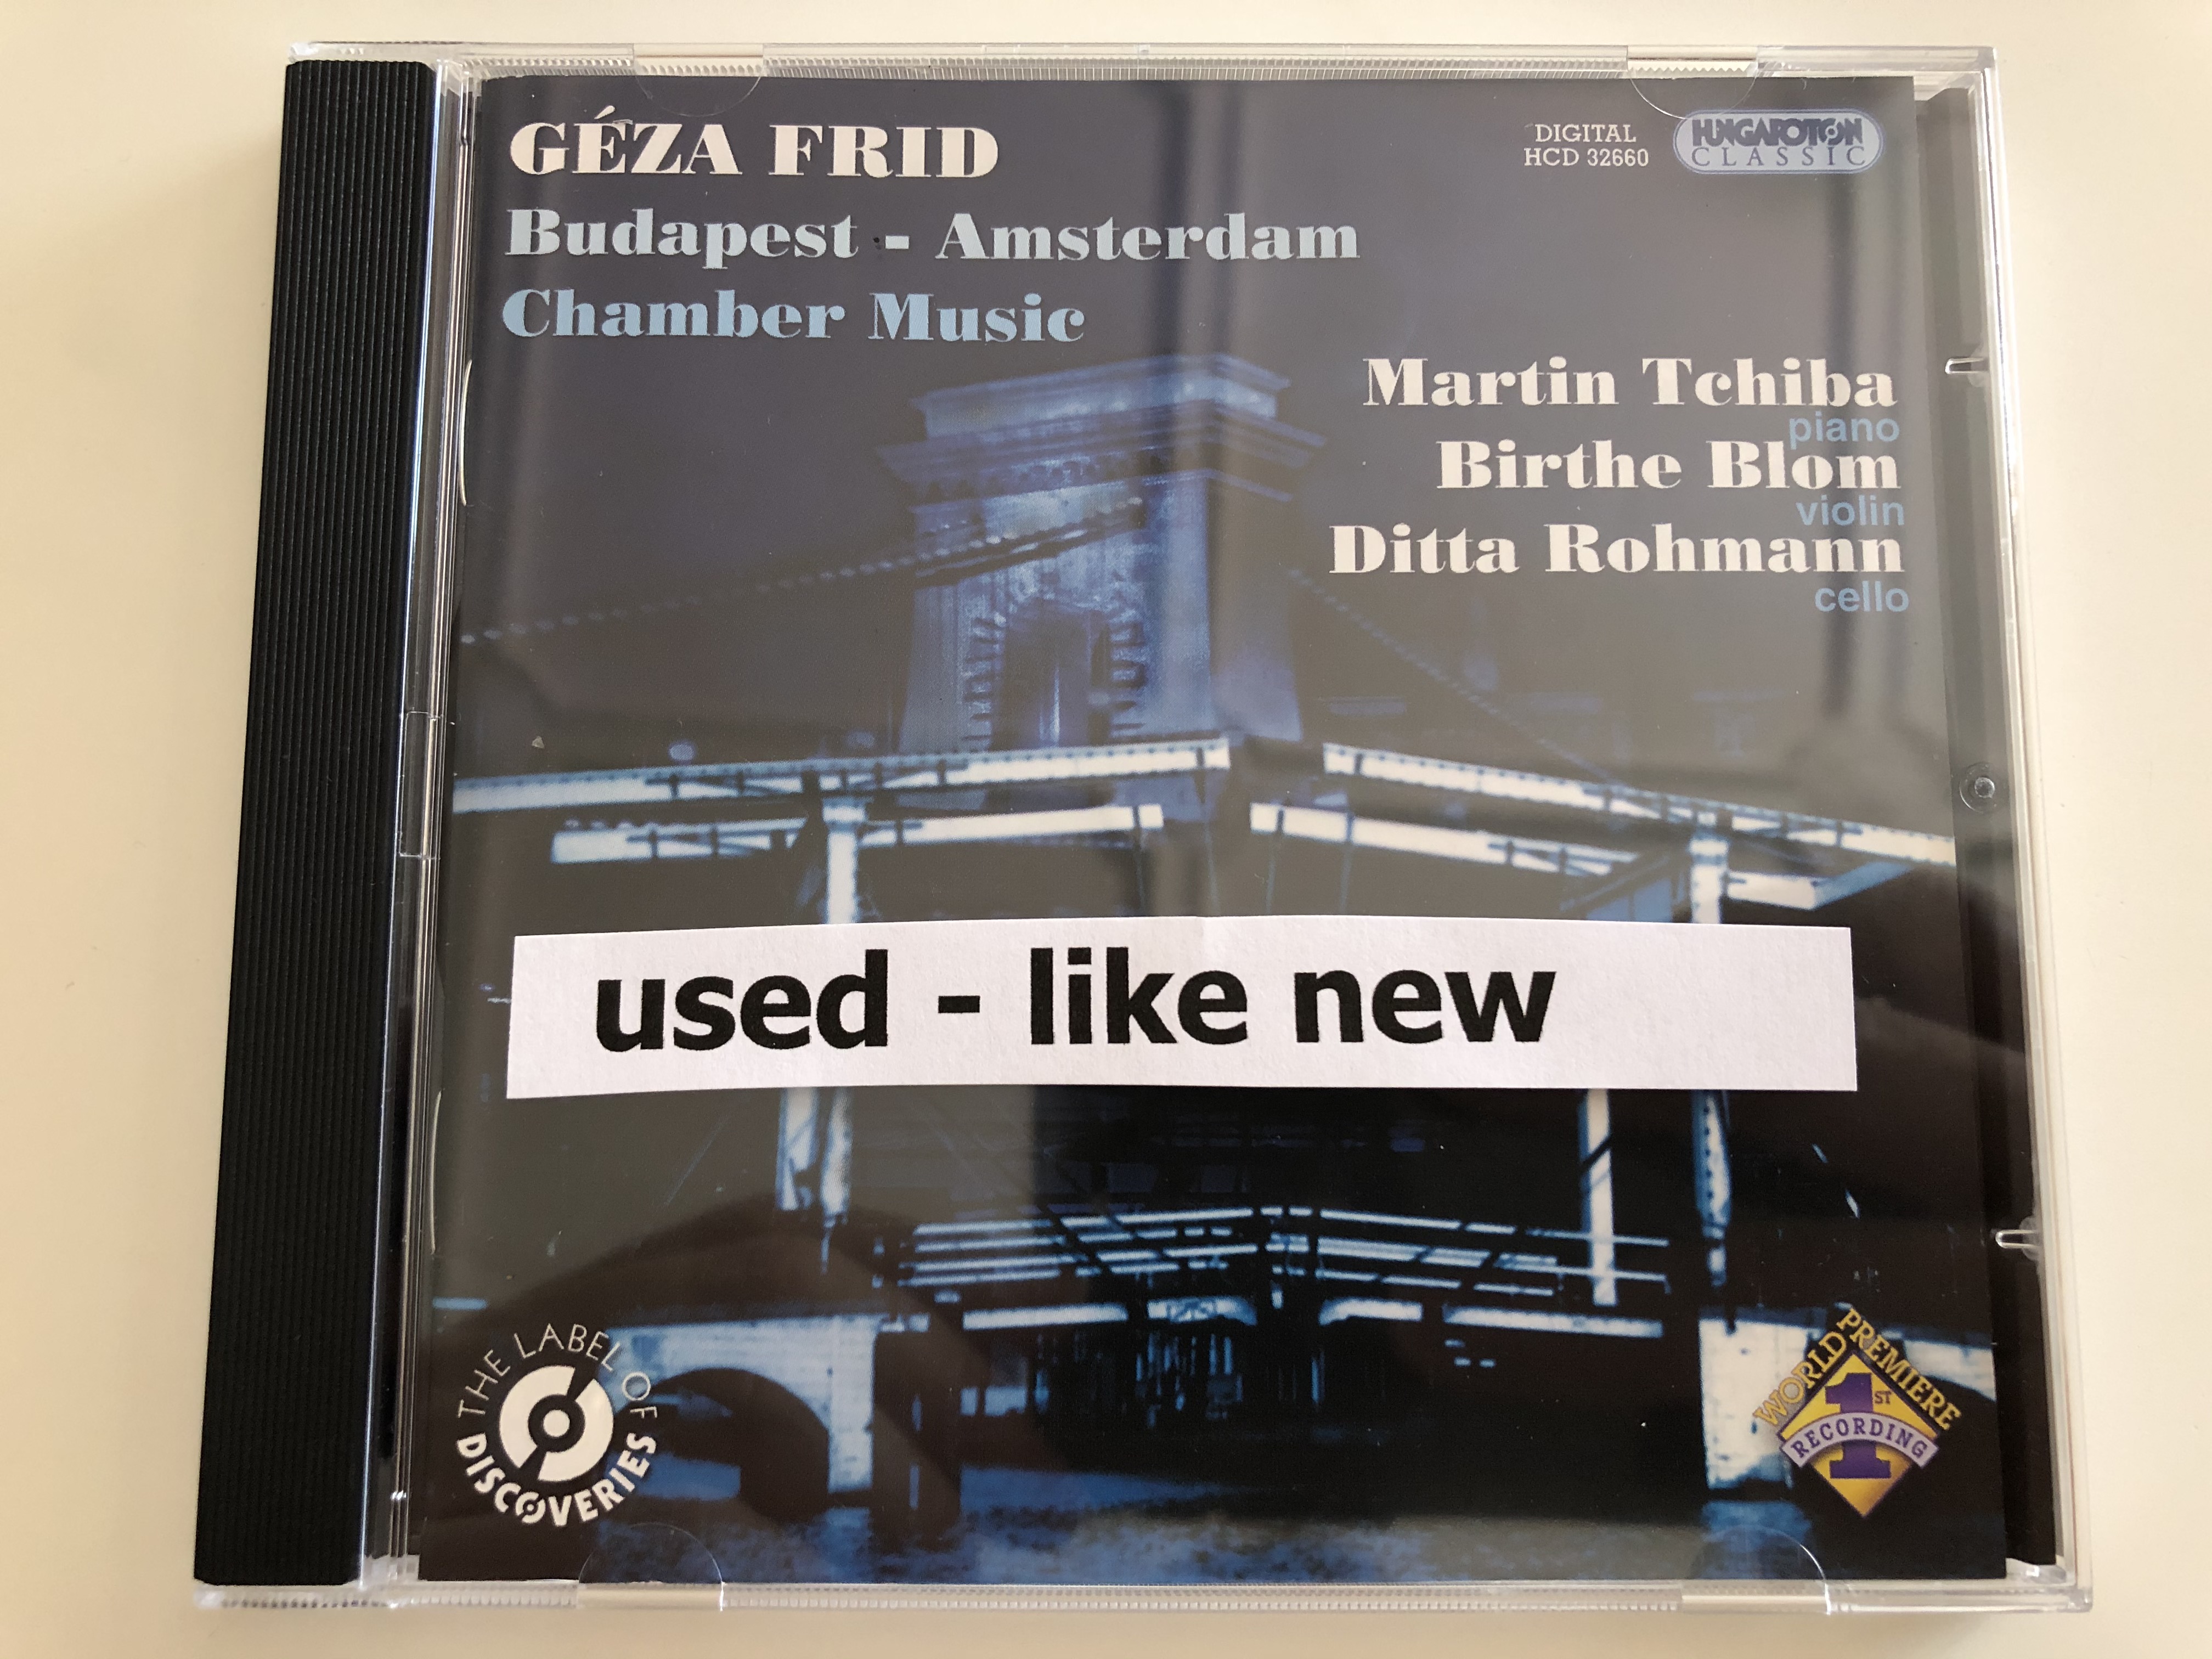 g-za-frid-budapest-amsterdam-chamber-music-martin-tchiba-piano-birthe-blom-violin-ditta-rohmann-cello-hungaroton-classic-audio-cd-2009-stereo-hcd-32660-16-.jpg